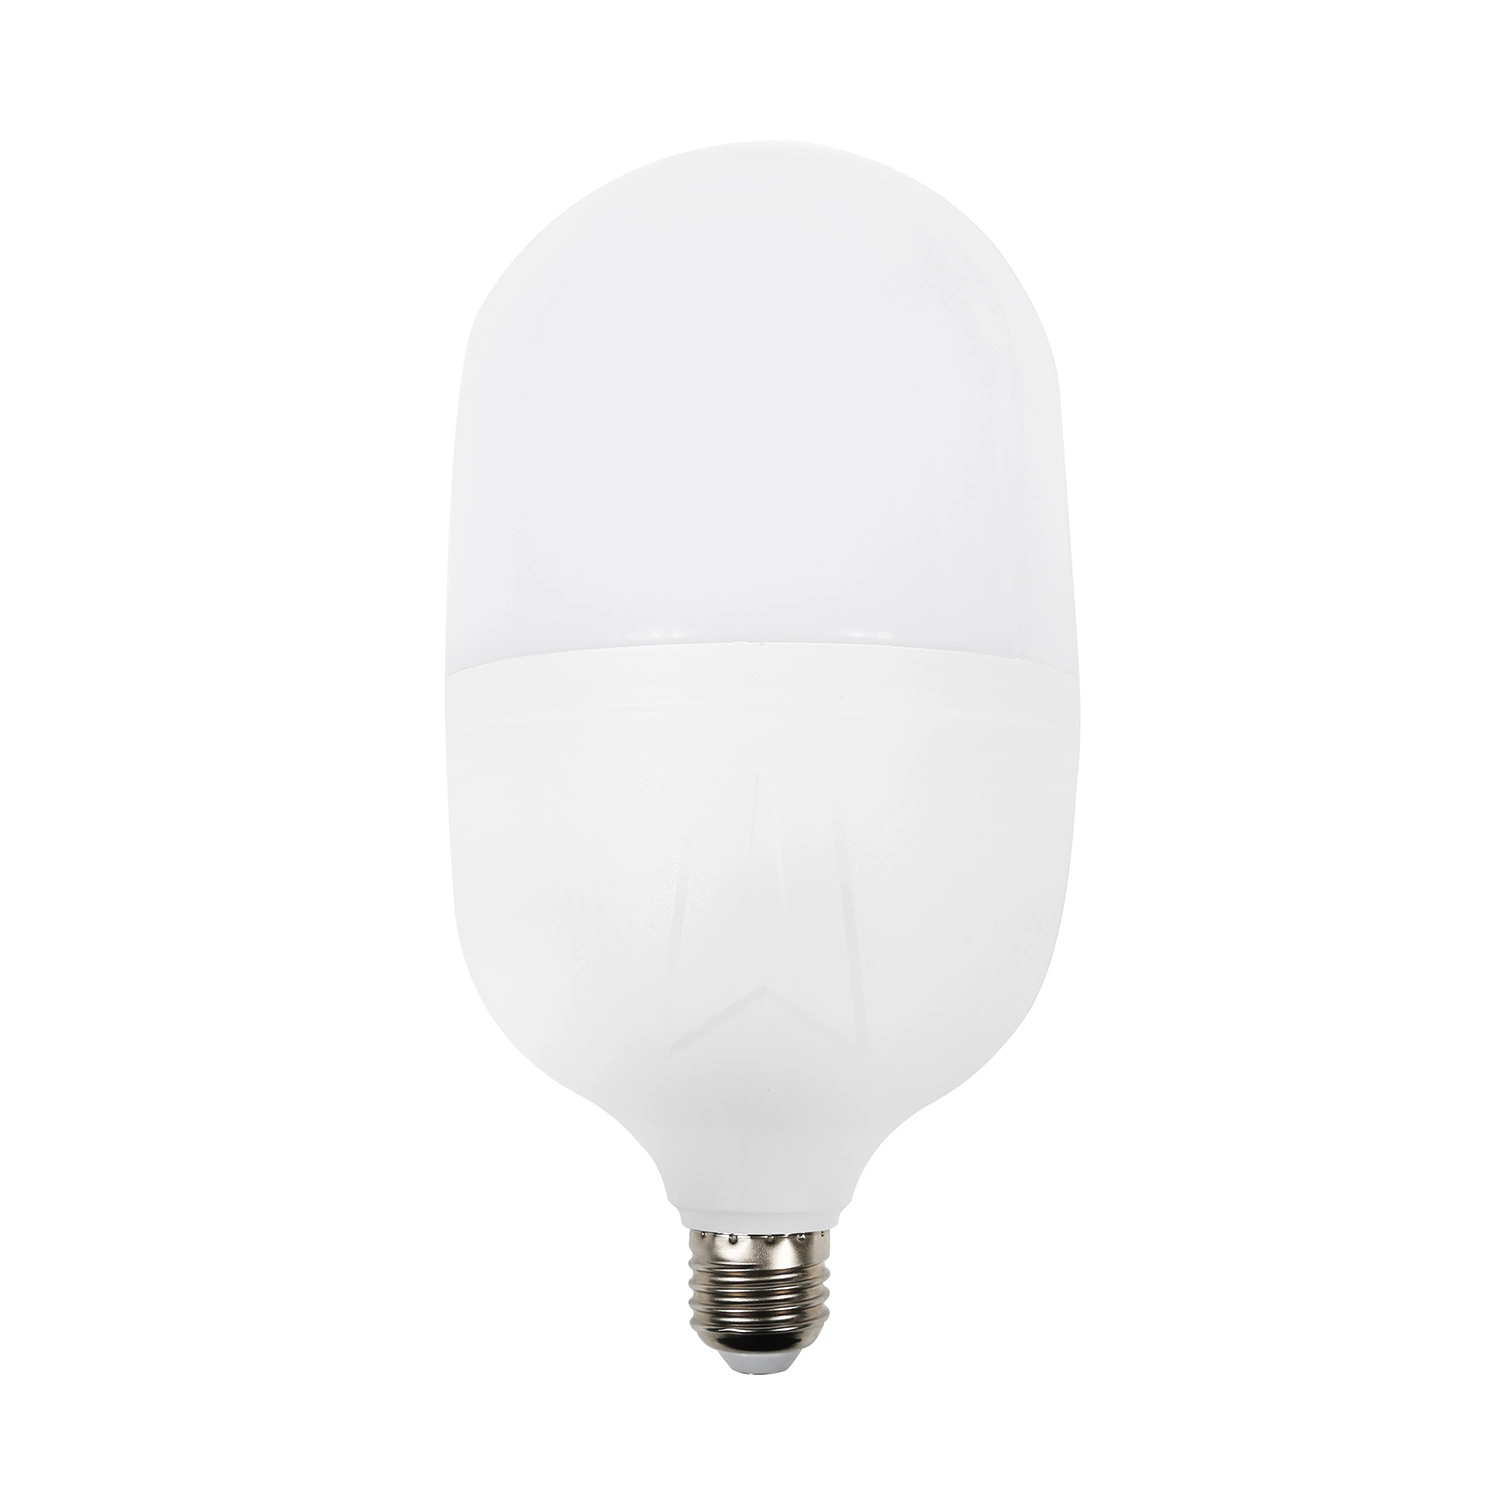 Home Decoration High Brightness 140lm 20W 30W 40W LED Energy Saving Lamp LED Lamp Lighting